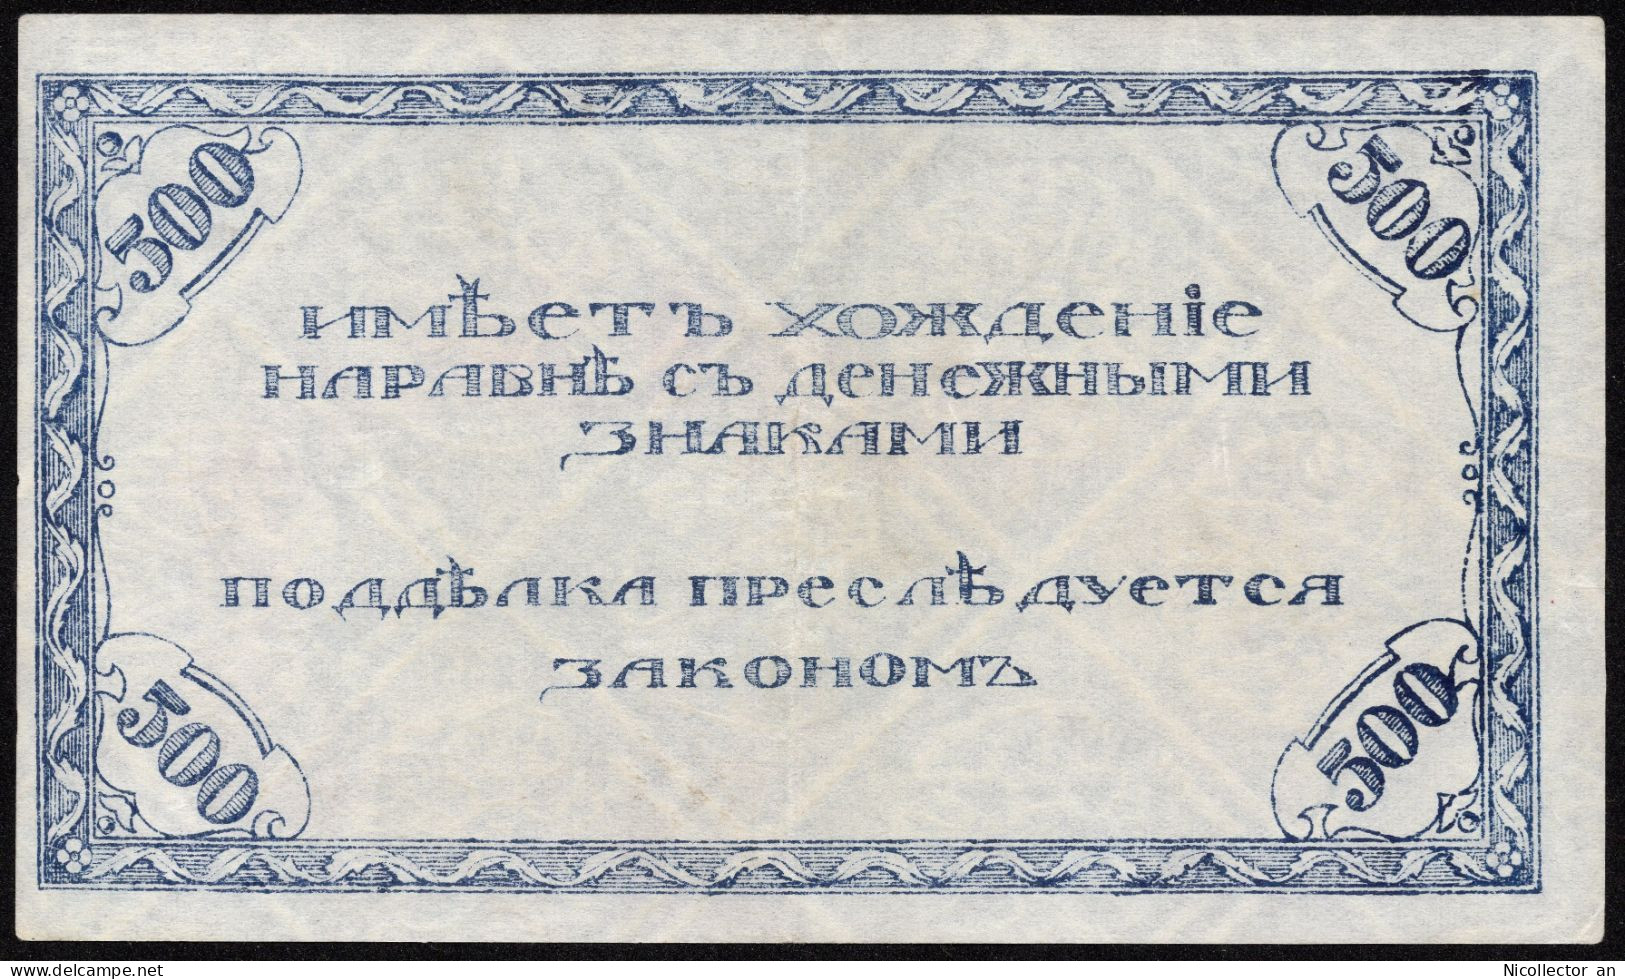 Russia 500 Rubles 1920 S-1188a *XF+* Rare Banknote - Russie